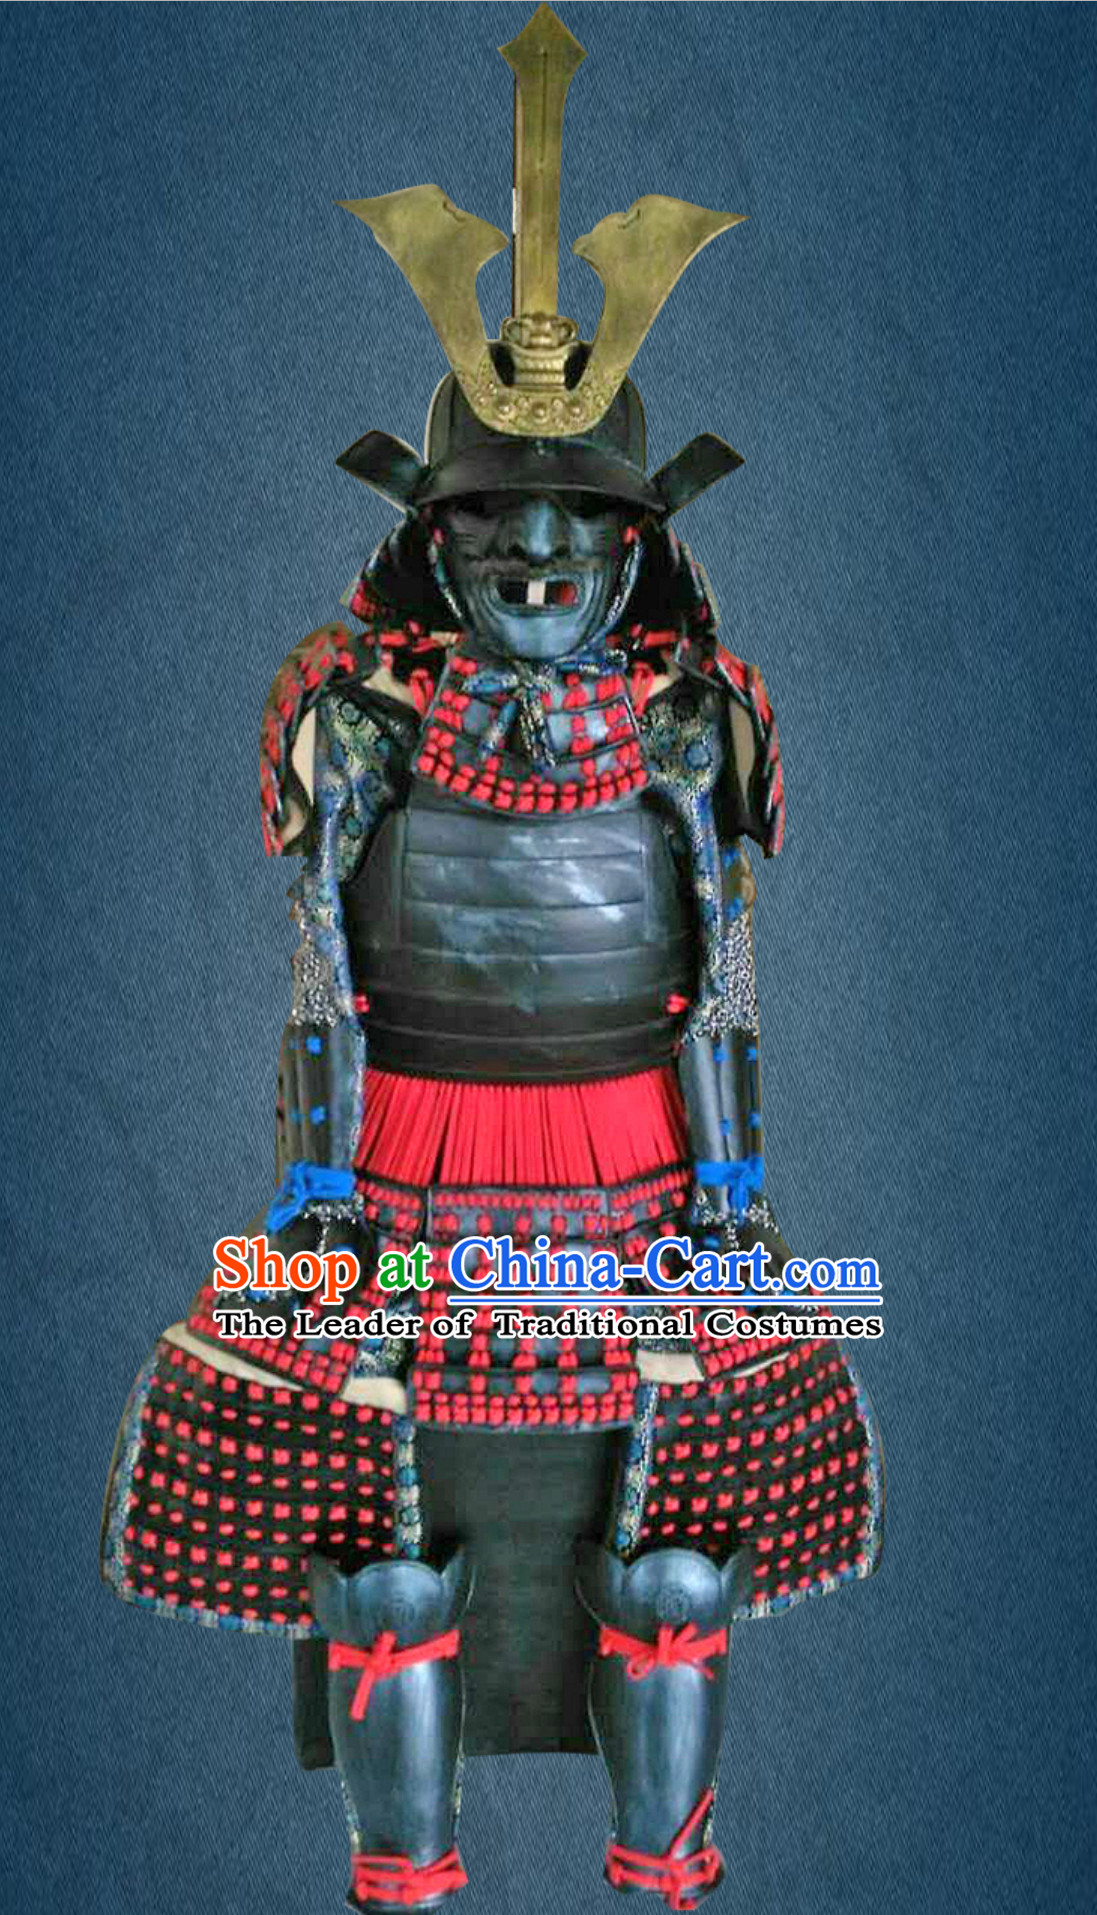 Authentic Japanese Samurai Armor for Sale